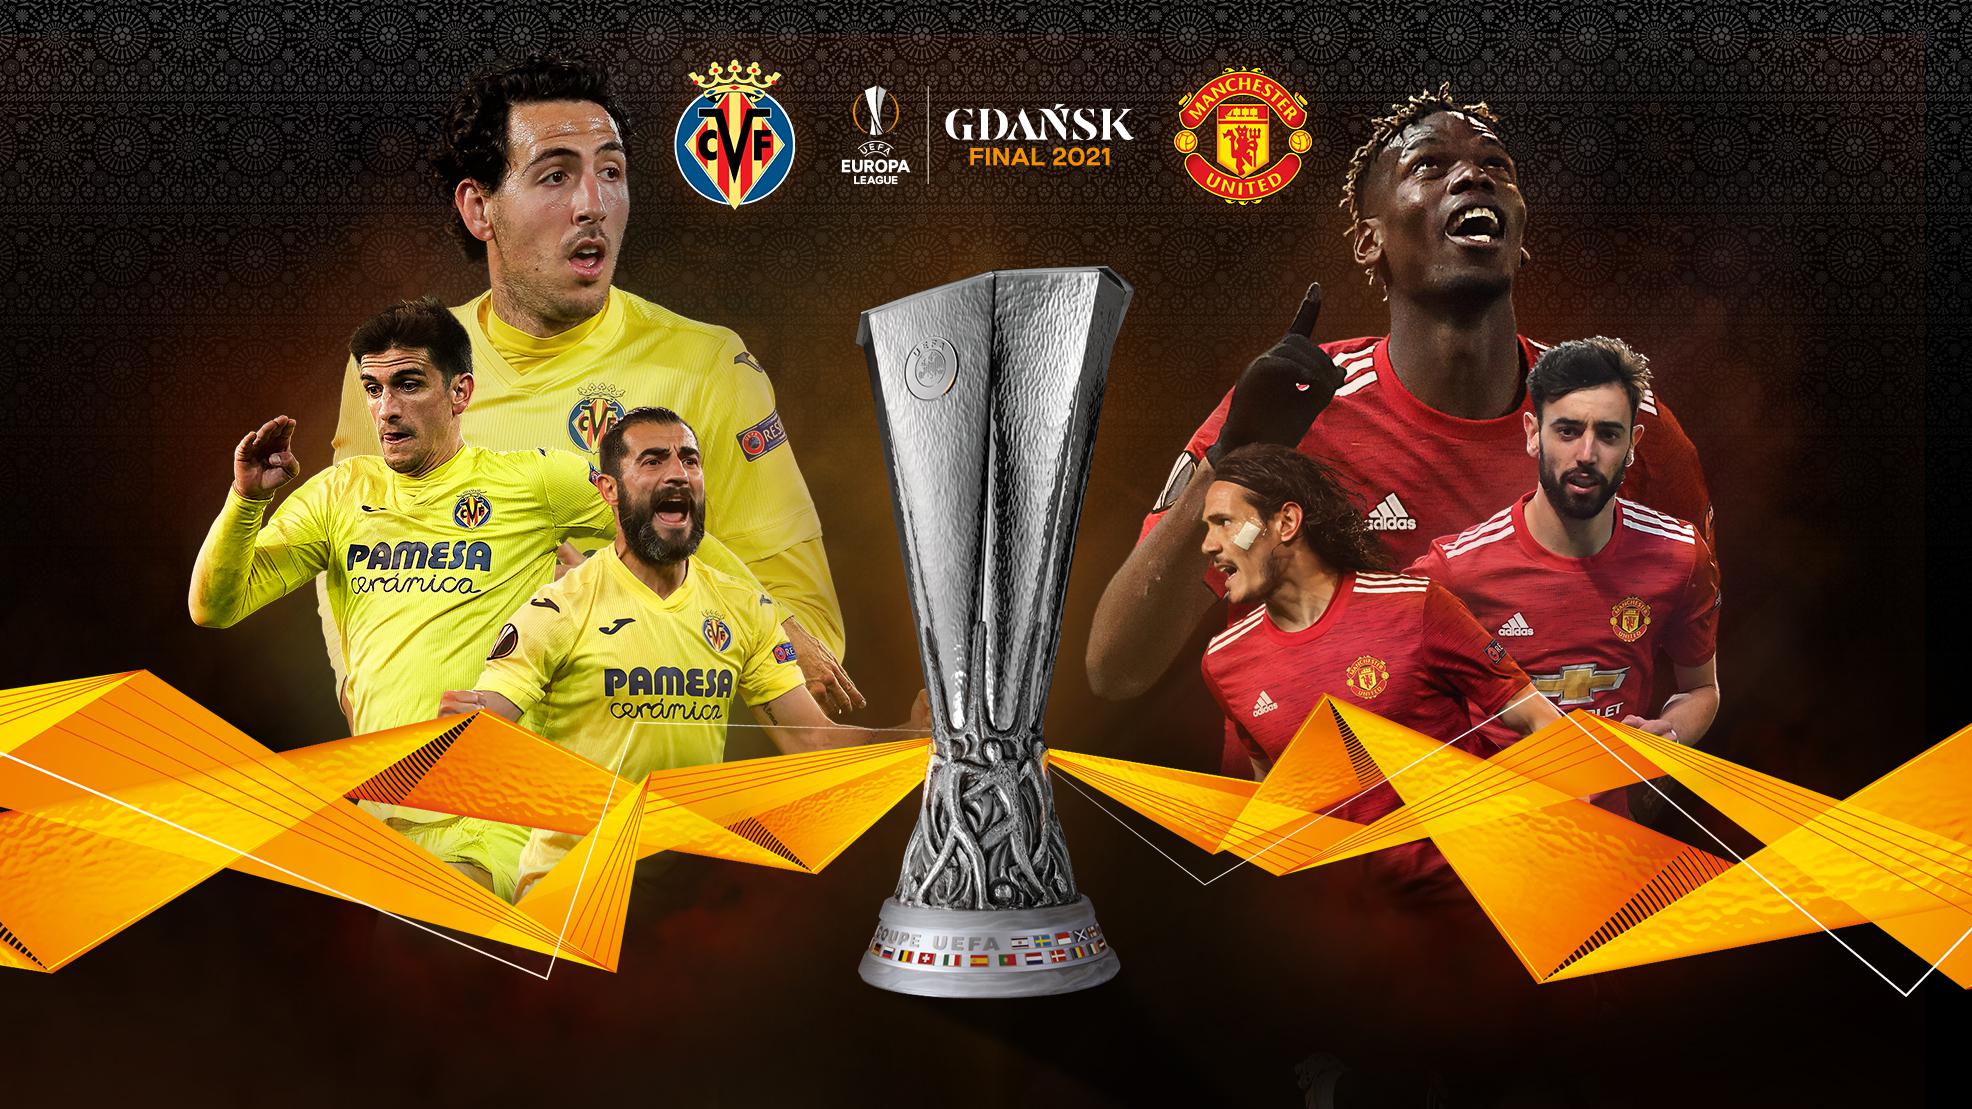 Villarreal Man. United. Villarreal Vs Manchester United Europa League Final Preview: Where To Watch, Team News, Predictions. UEFA Europa League. UEFA .com